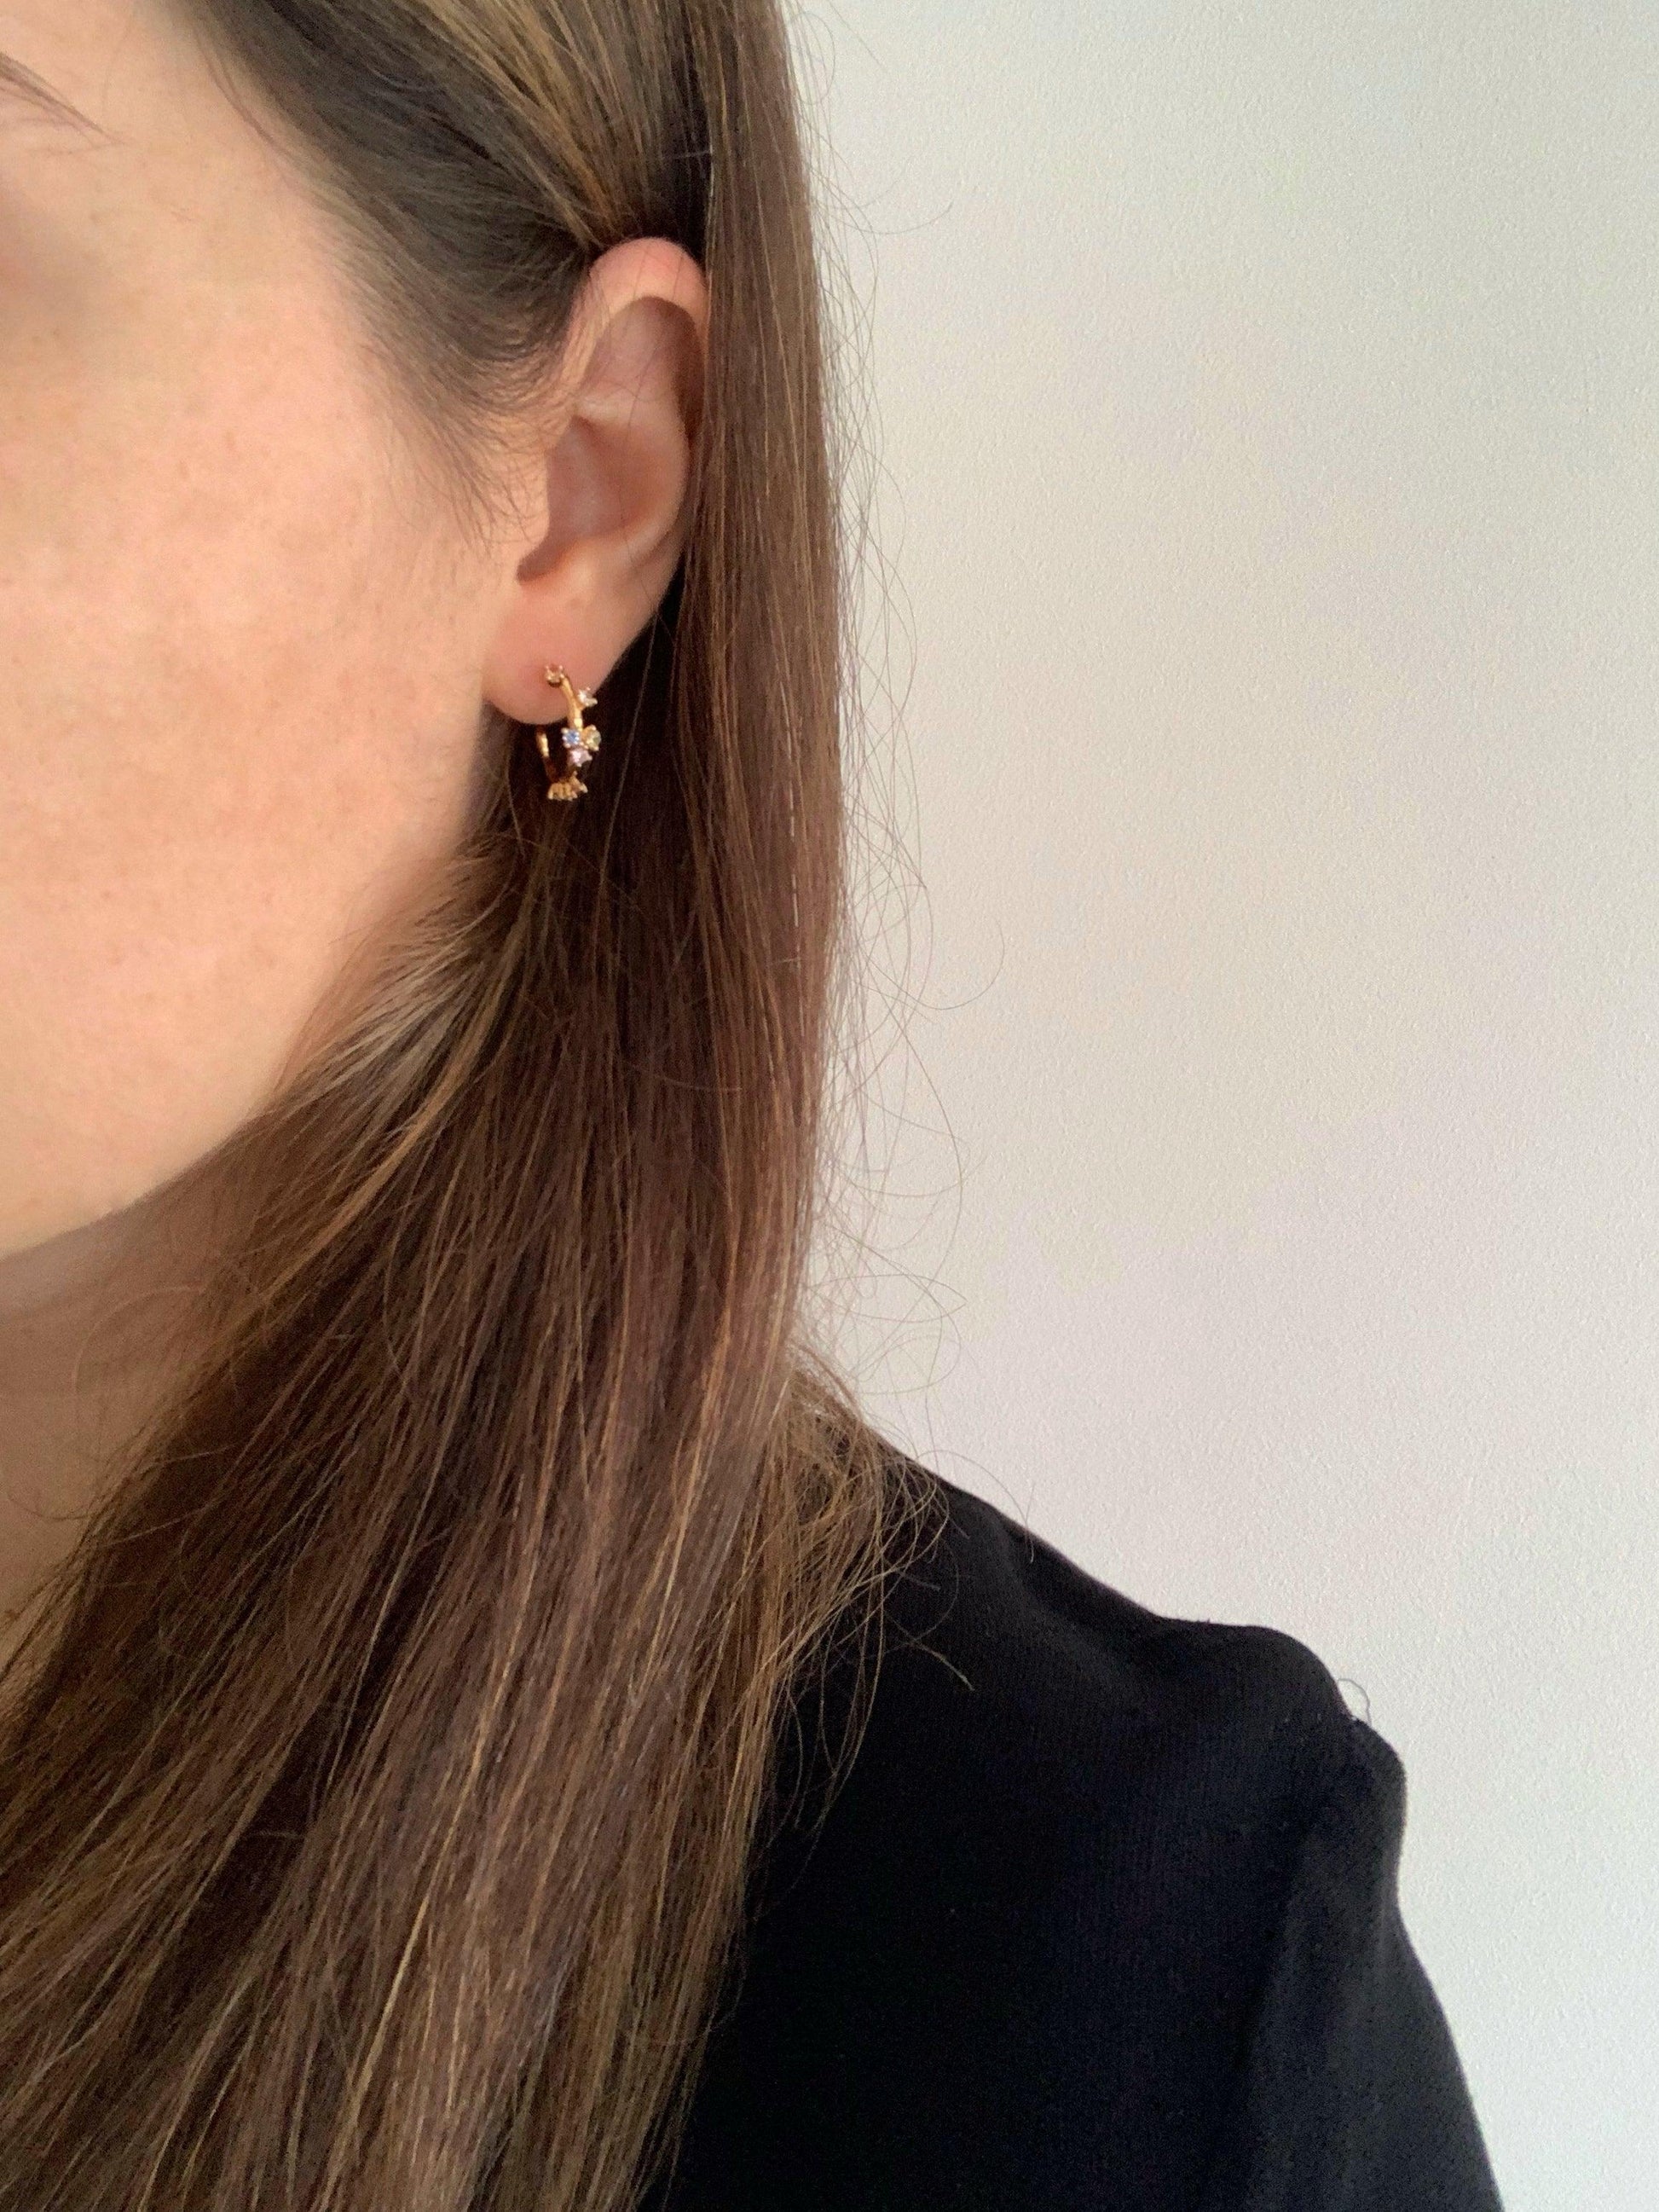 Magoito earrings - Hedji